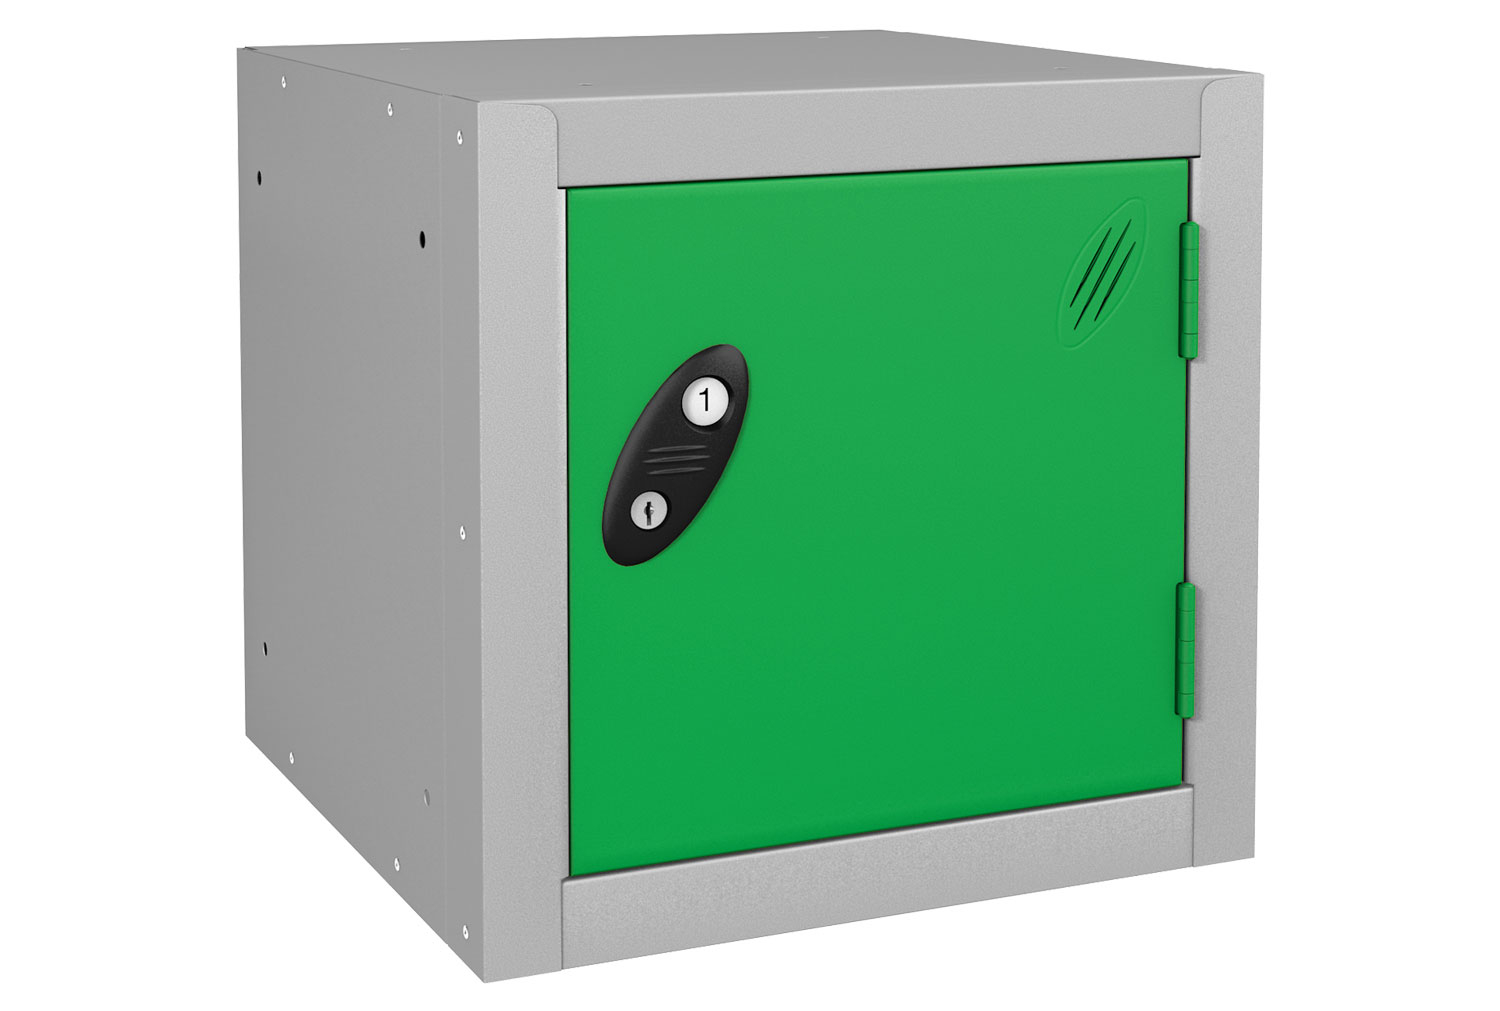 Probe Cube Lockers, 31wx31dx31h (cm), Hasp Lock, Black Body, Green